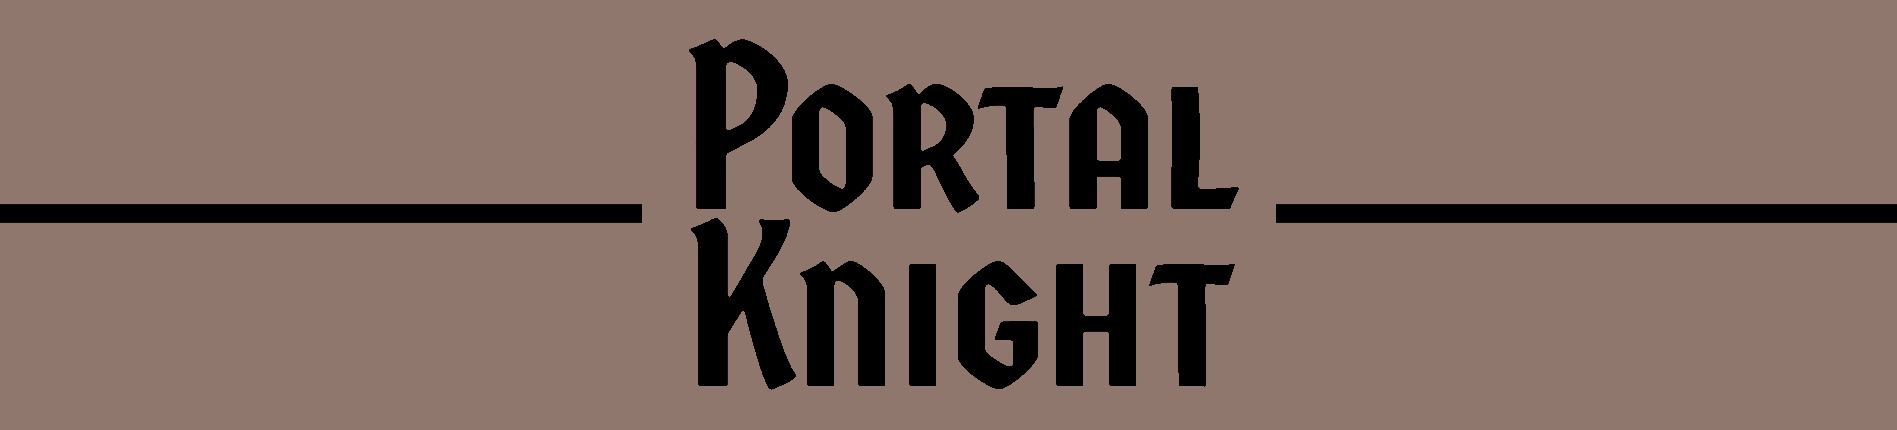 Portal Knight